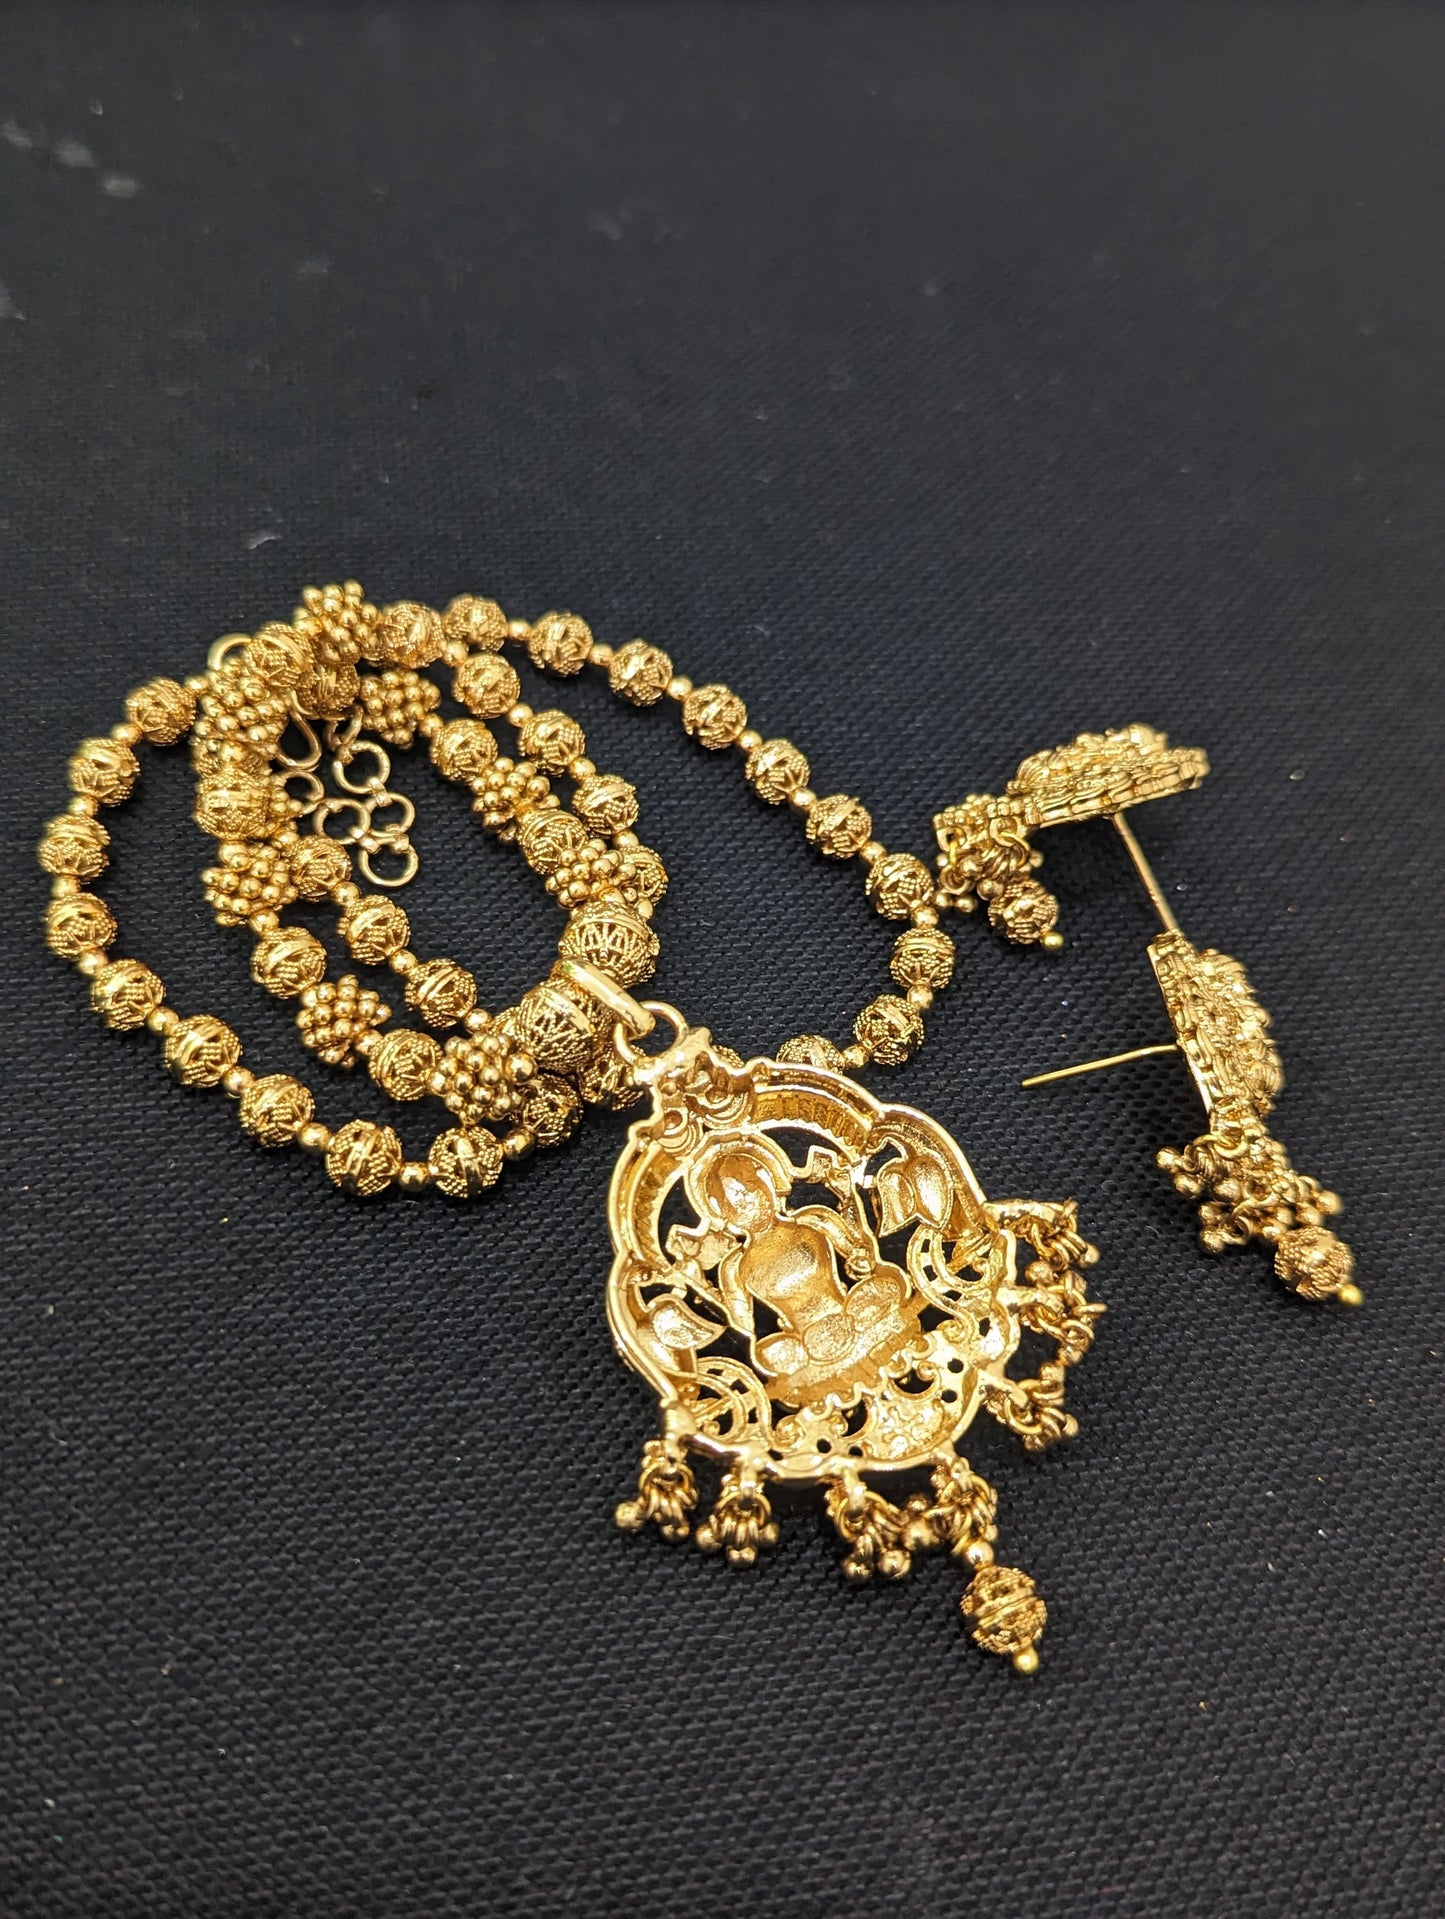 Goddess Lakshmi Pendant Chain and Earrings set - D2